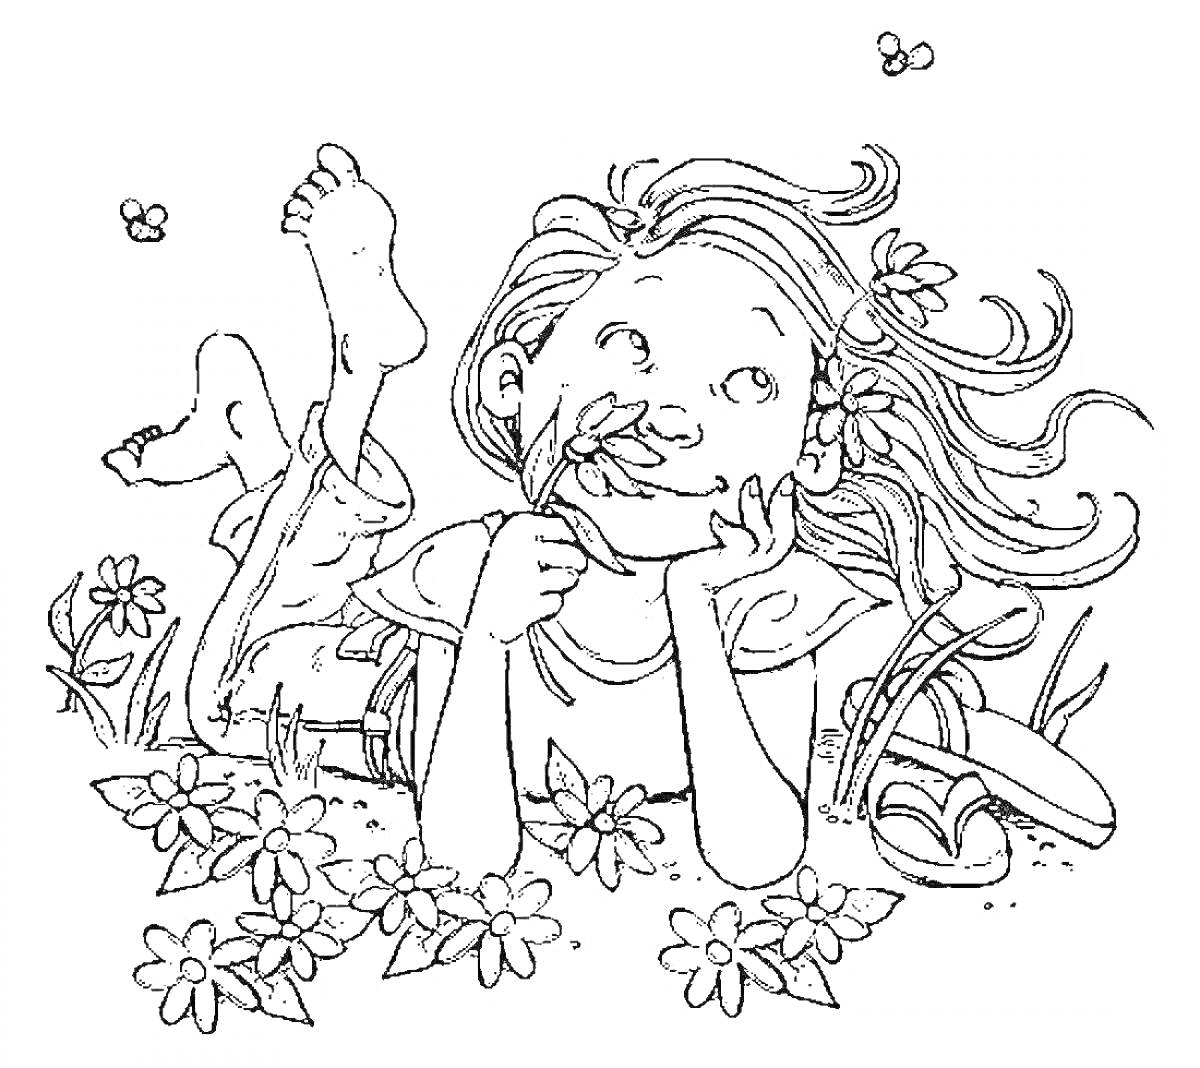 Раскраска Девочка лежит на траве среди цветов и бабочек, глядя в небо и держа цветок в руке